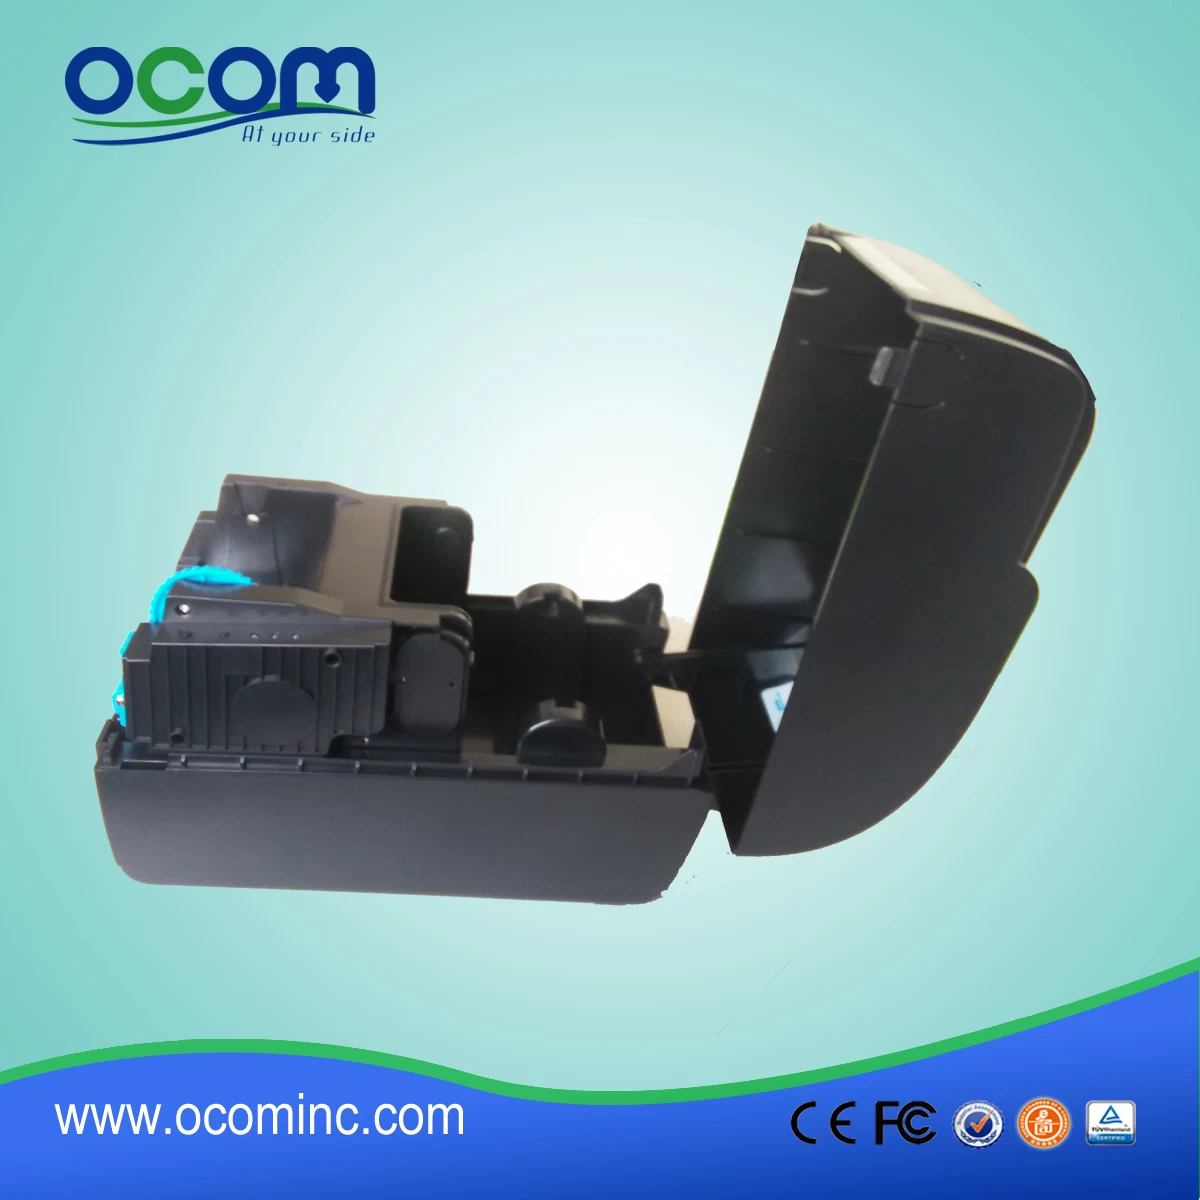 (OCBP-003) 2 Inches USB Direct Thermal Label Printer